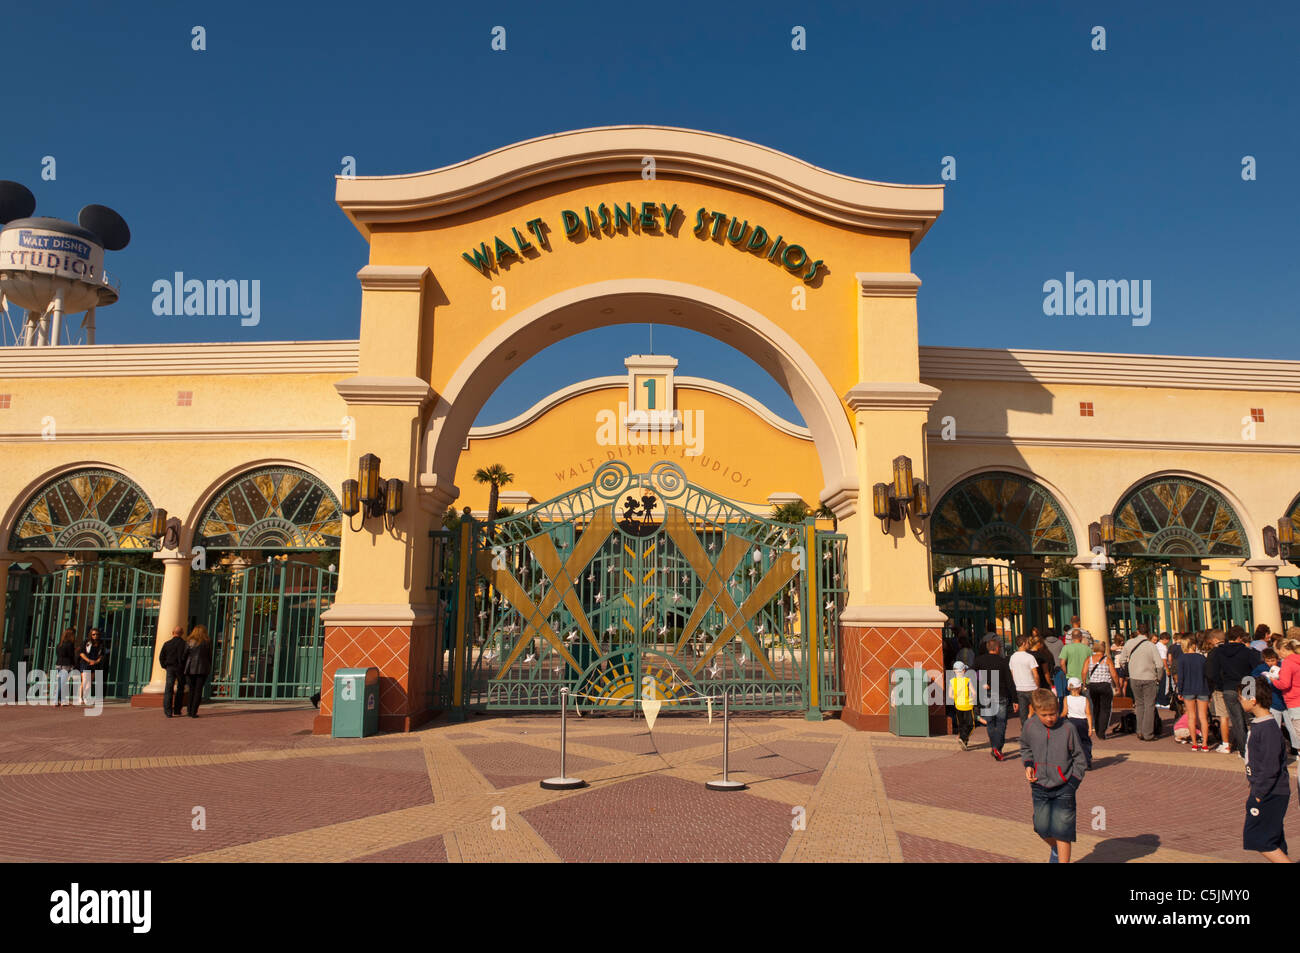 Walt disney studios park -Fotos und -Bildmaterial in hoher Auflösung – Alamy